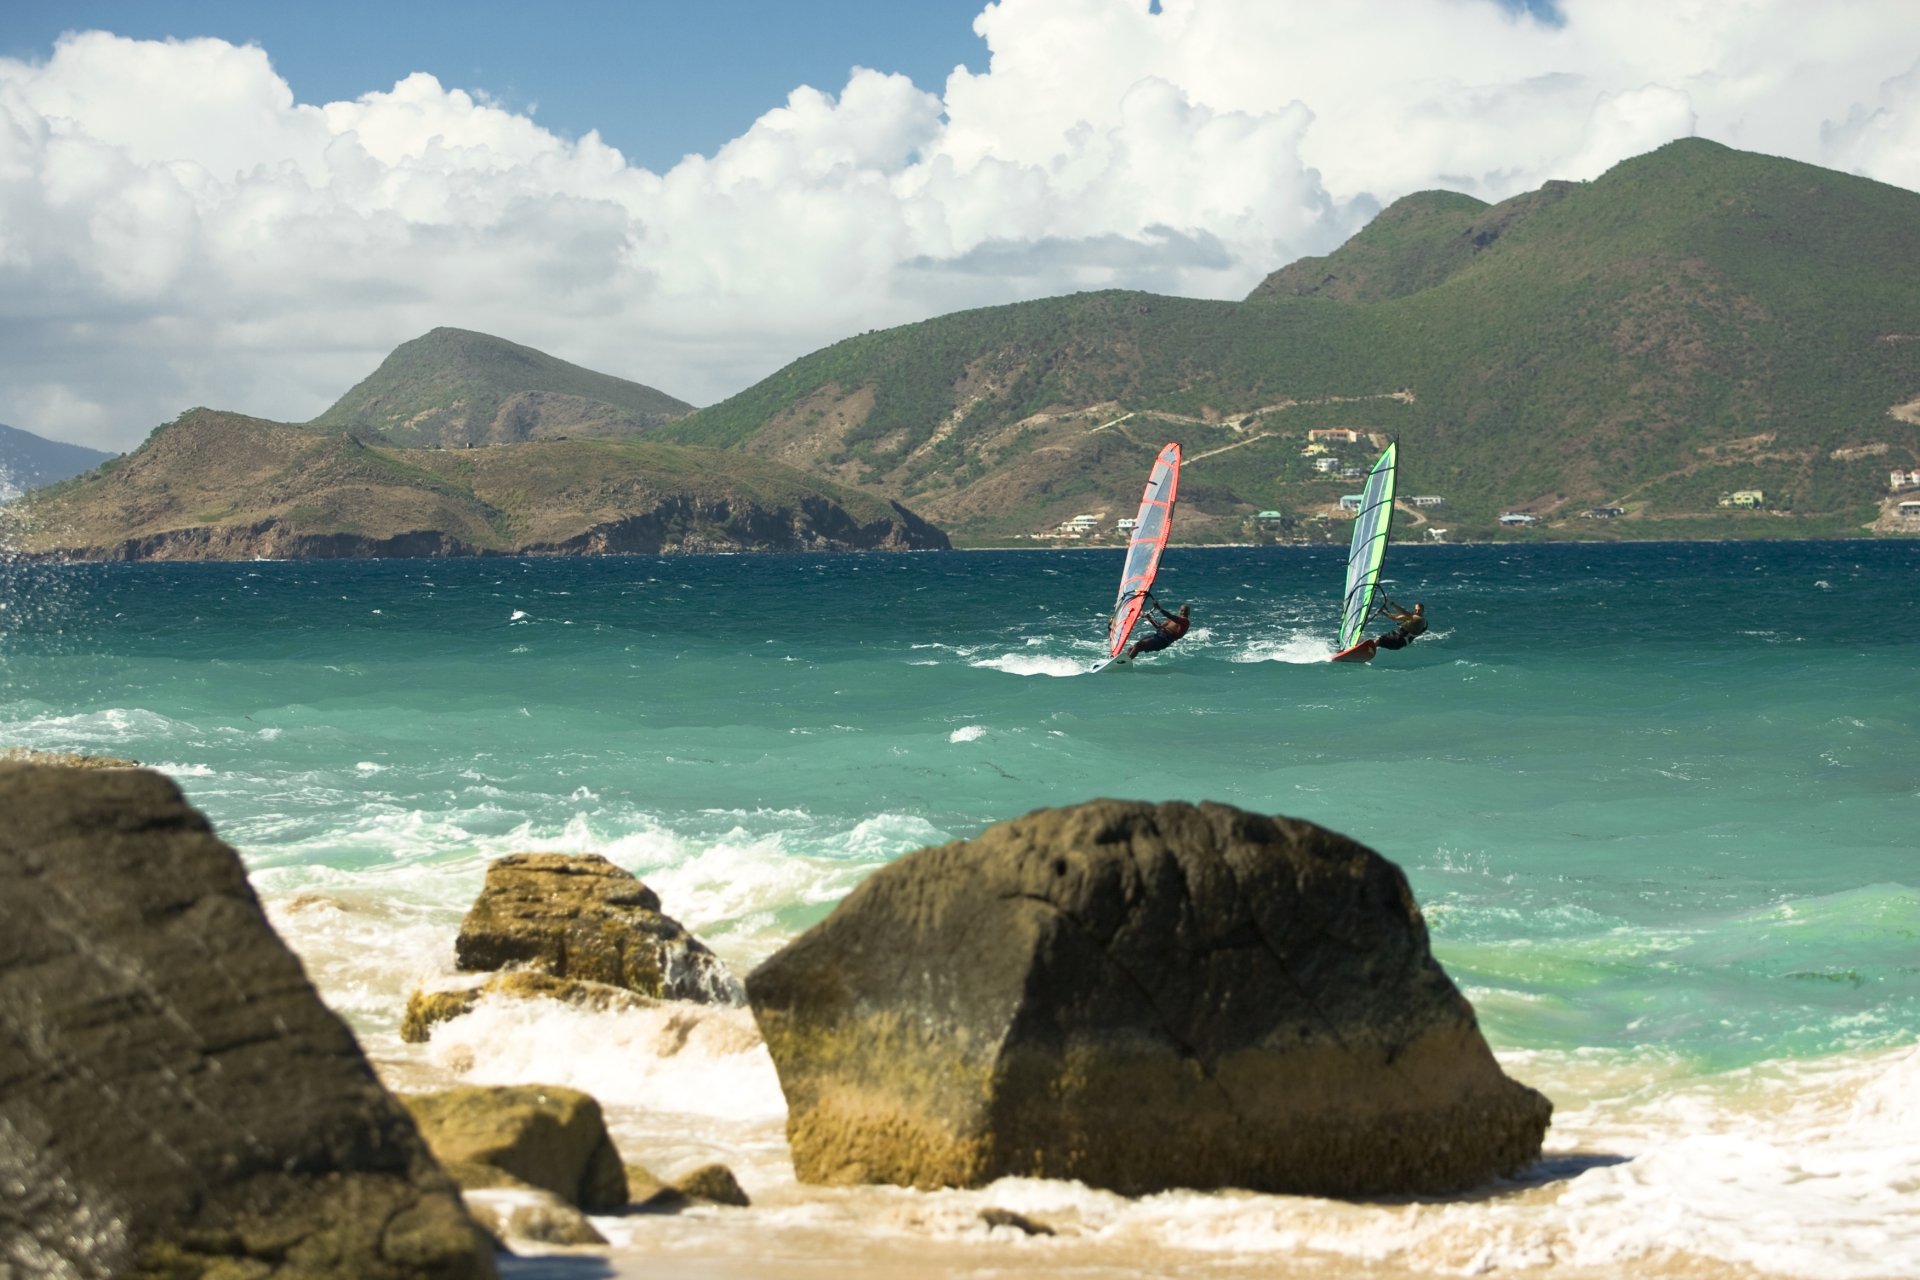 Windsurfing in Nevis